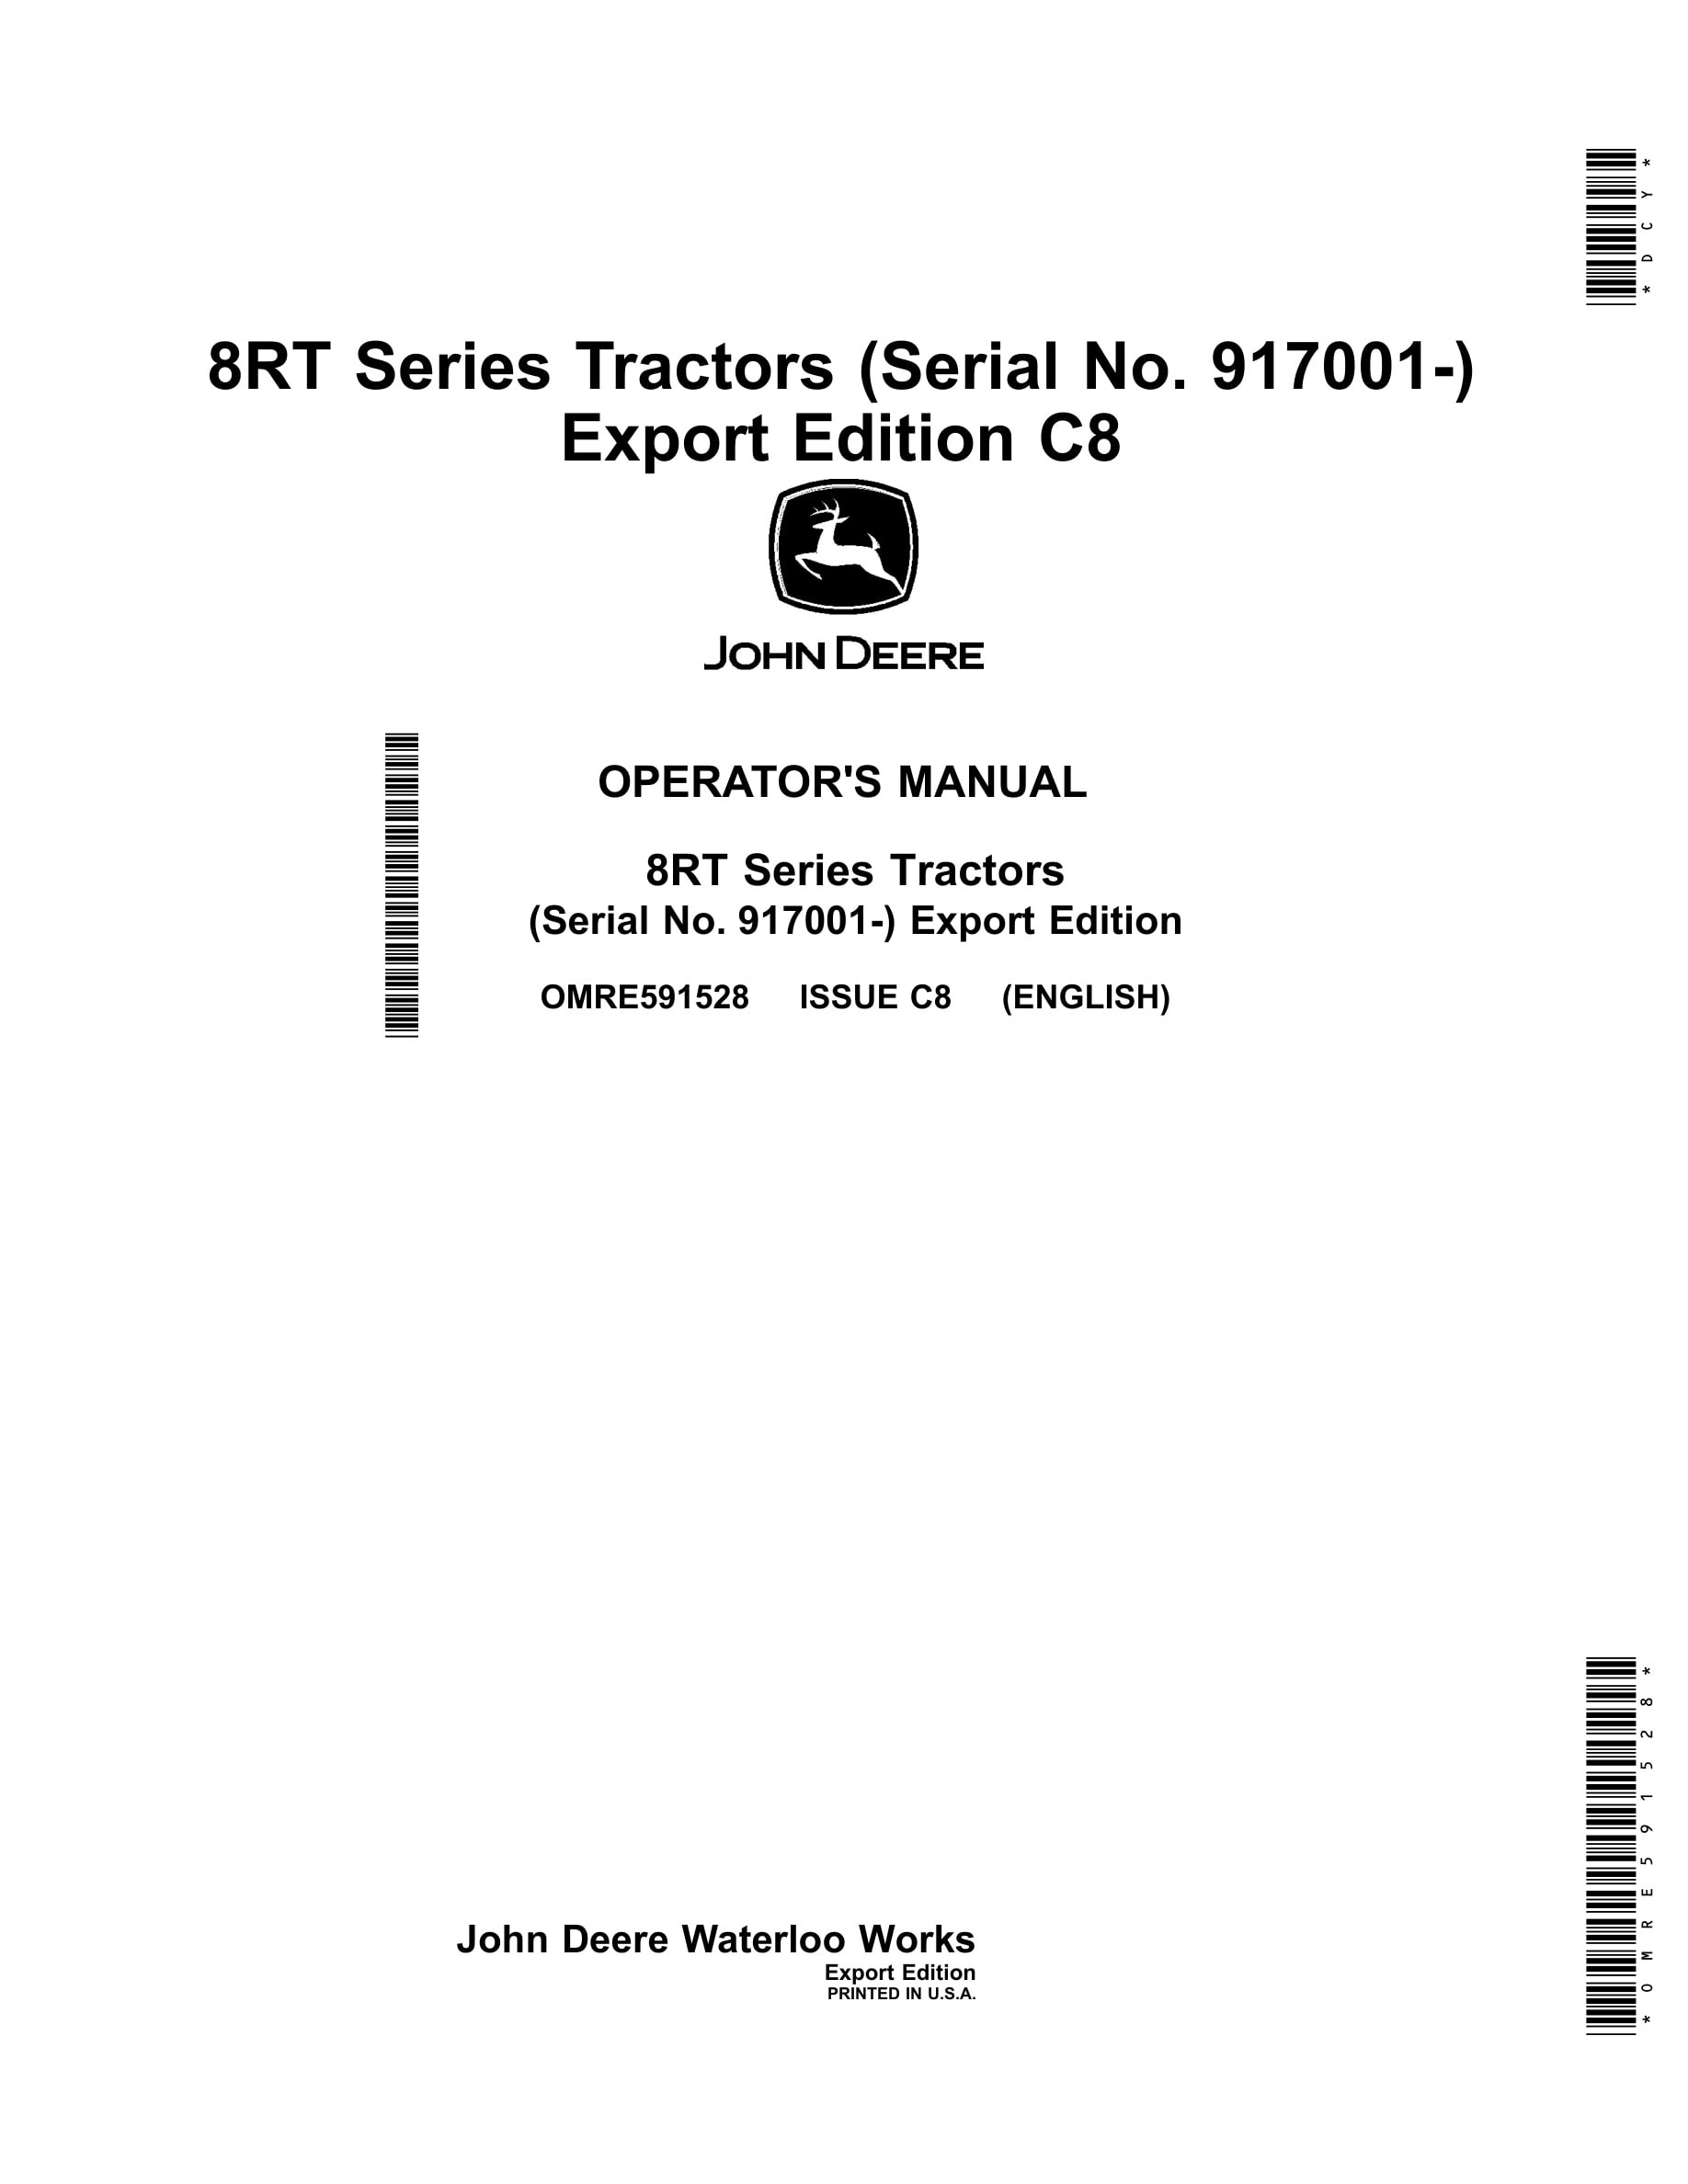 John Deere 8rt Series Tractors Operator Manuals OMRE591528-1